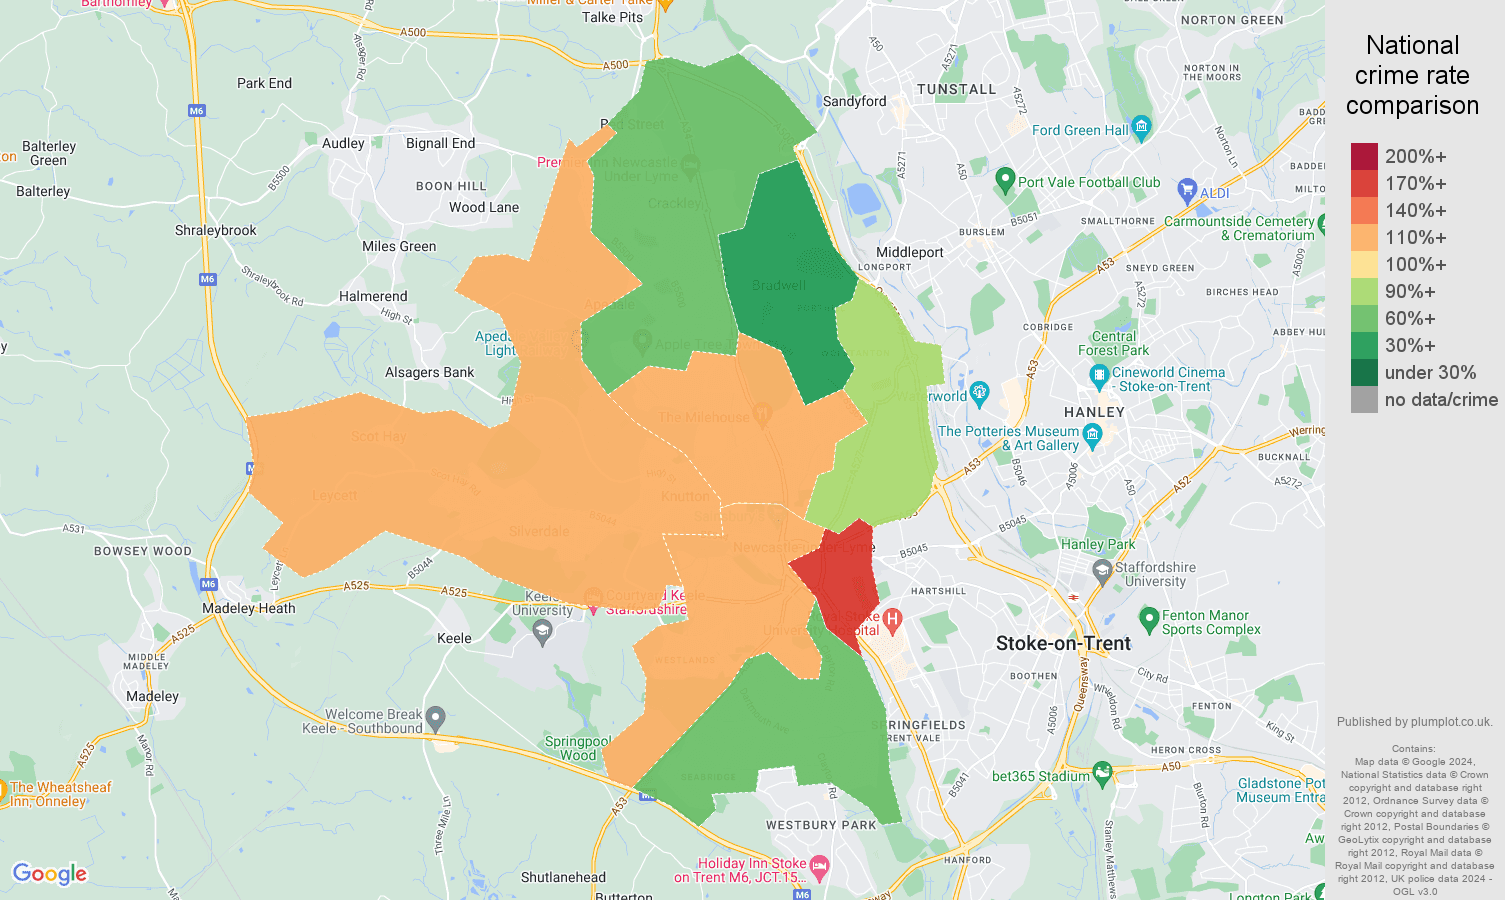 Newcastle under Lyme crime rate comparison map